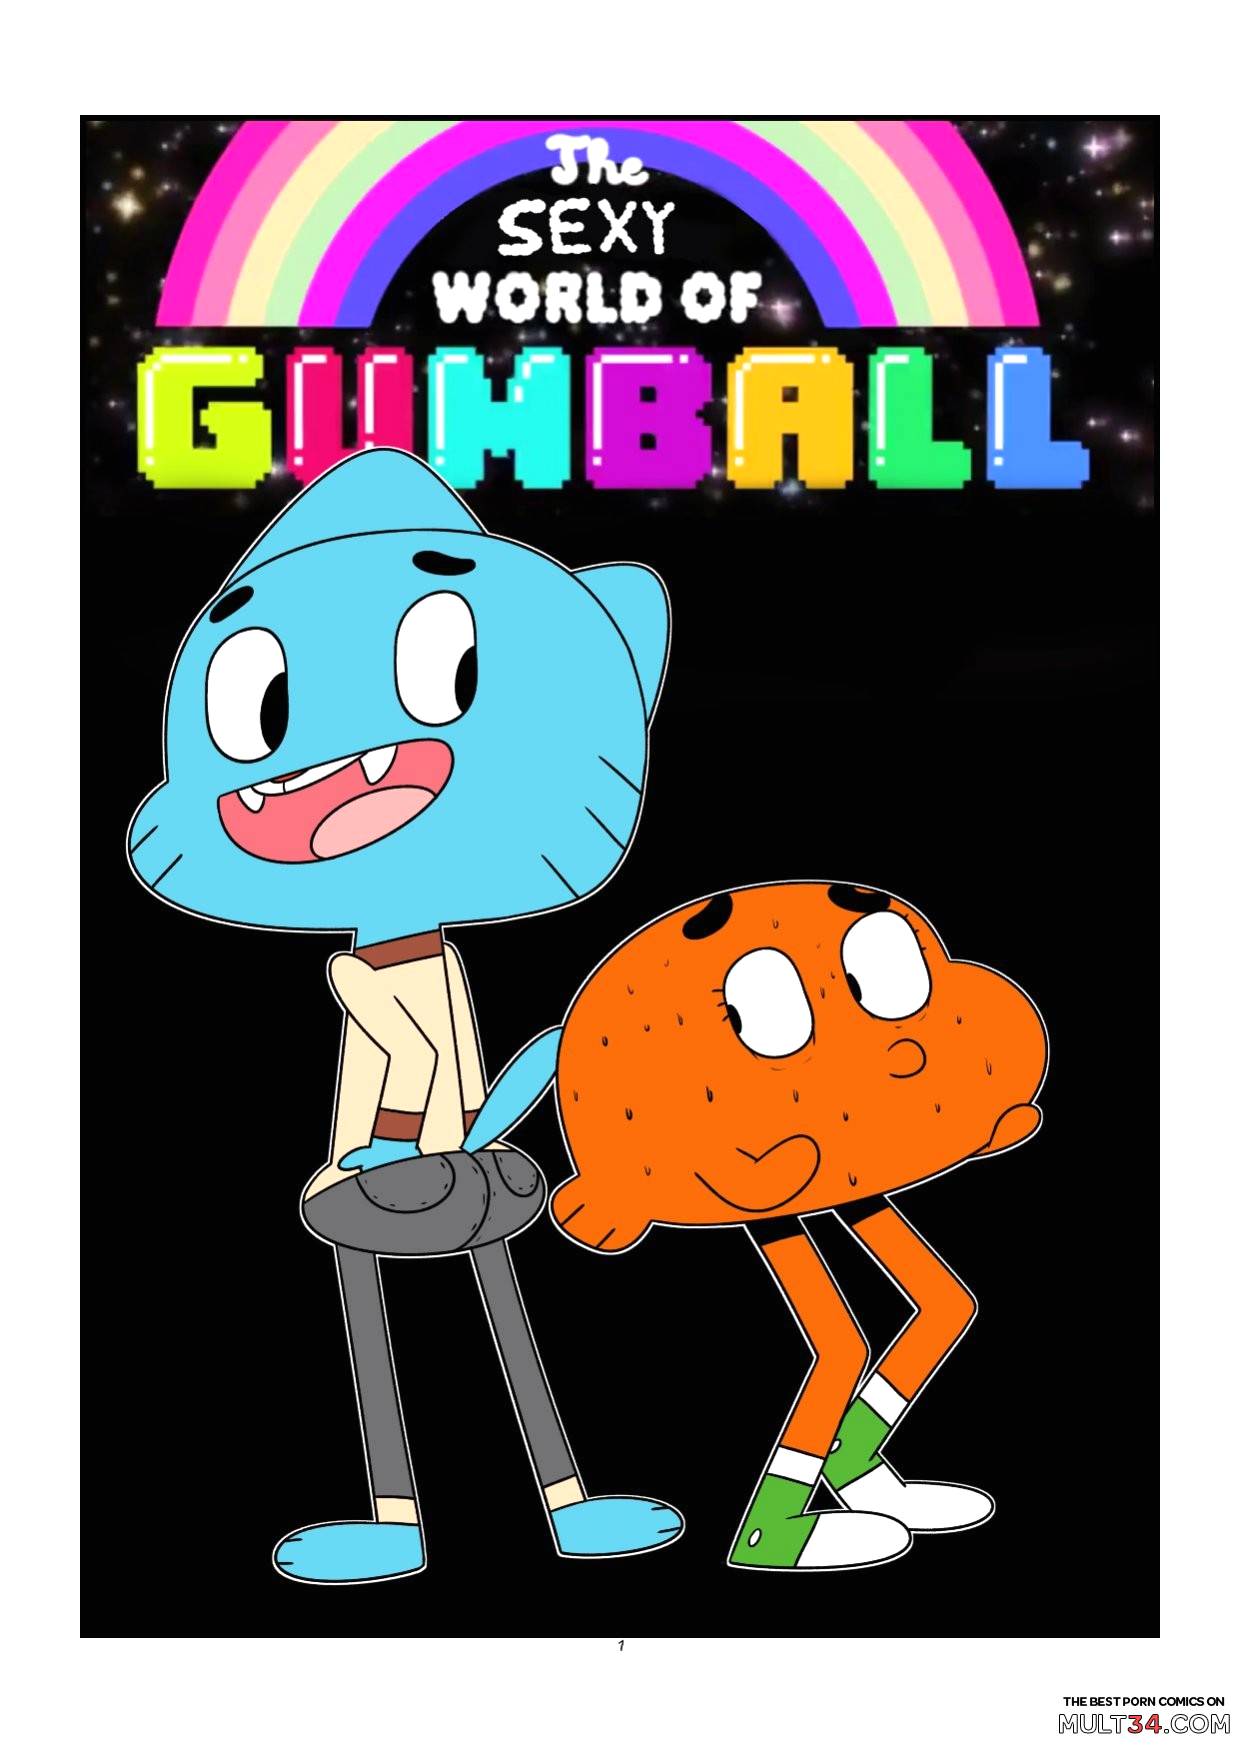 Hot Cartoon Hentai Gumball - The Sexy World Of Gumball gay porn comic - the best cartoon porn comics,  Rule 34 | MULT34